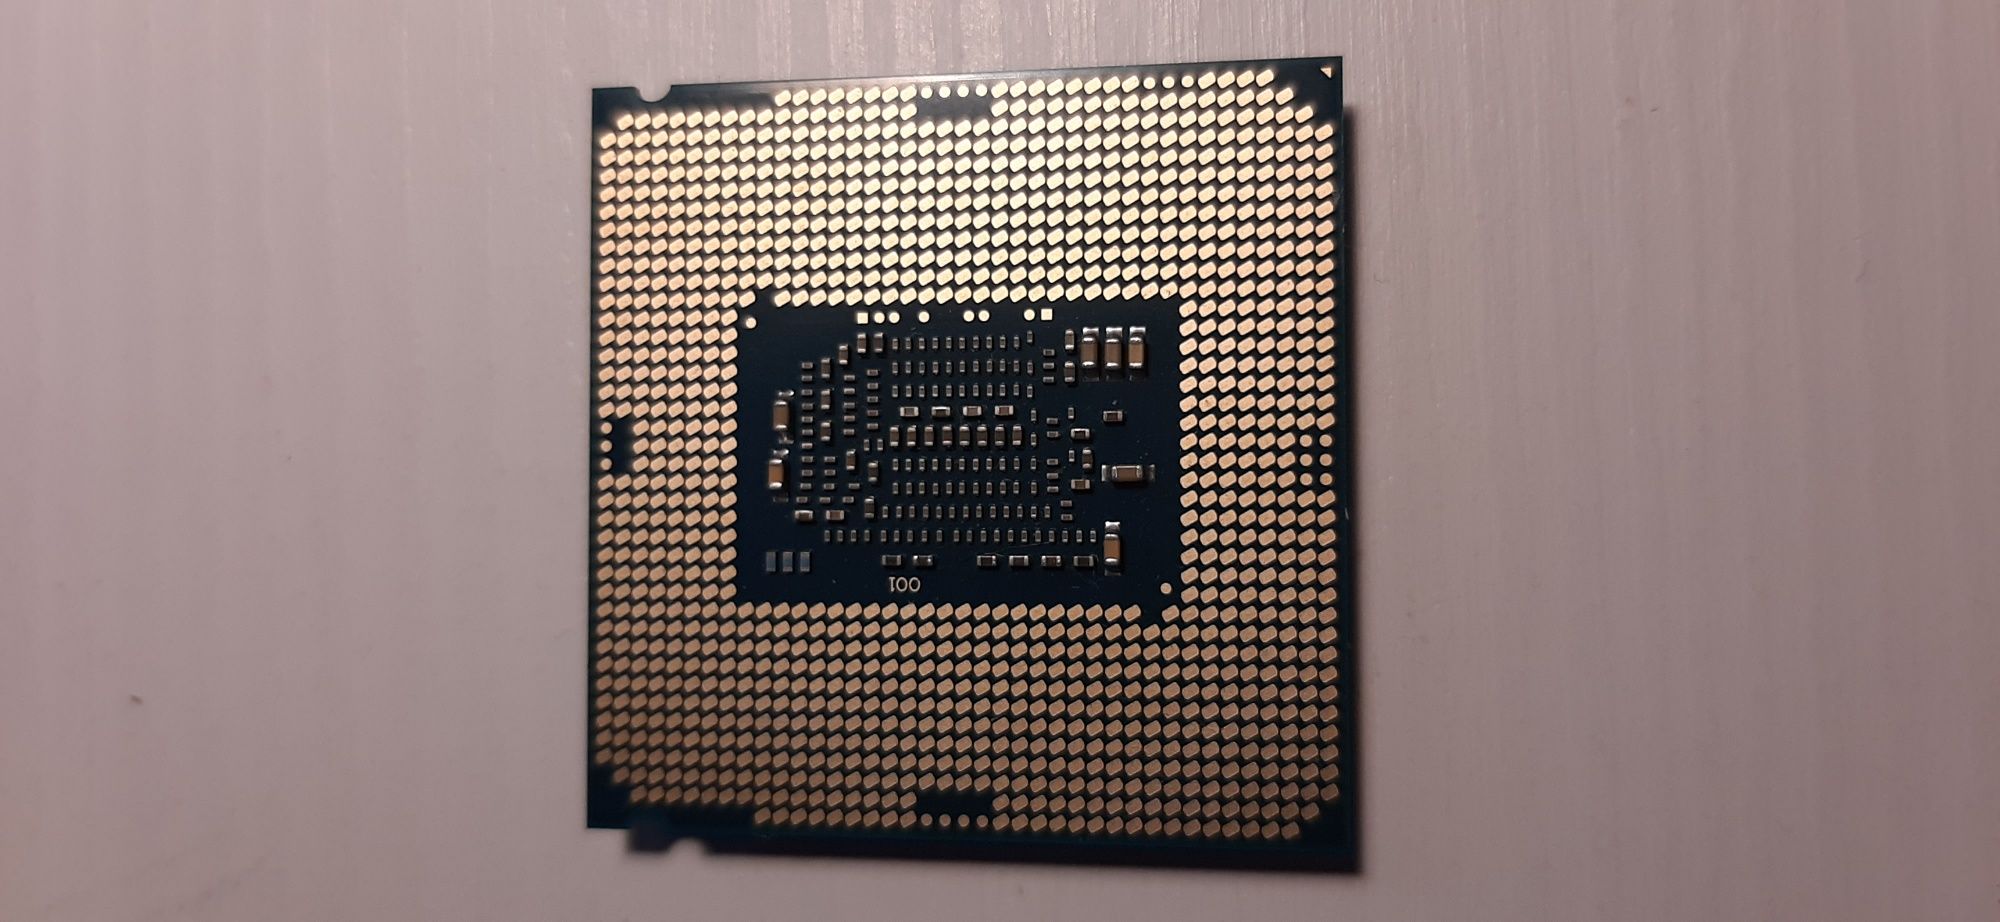 Procesor Pc / desktop /  Intel i7 6700T, 2,8ghz